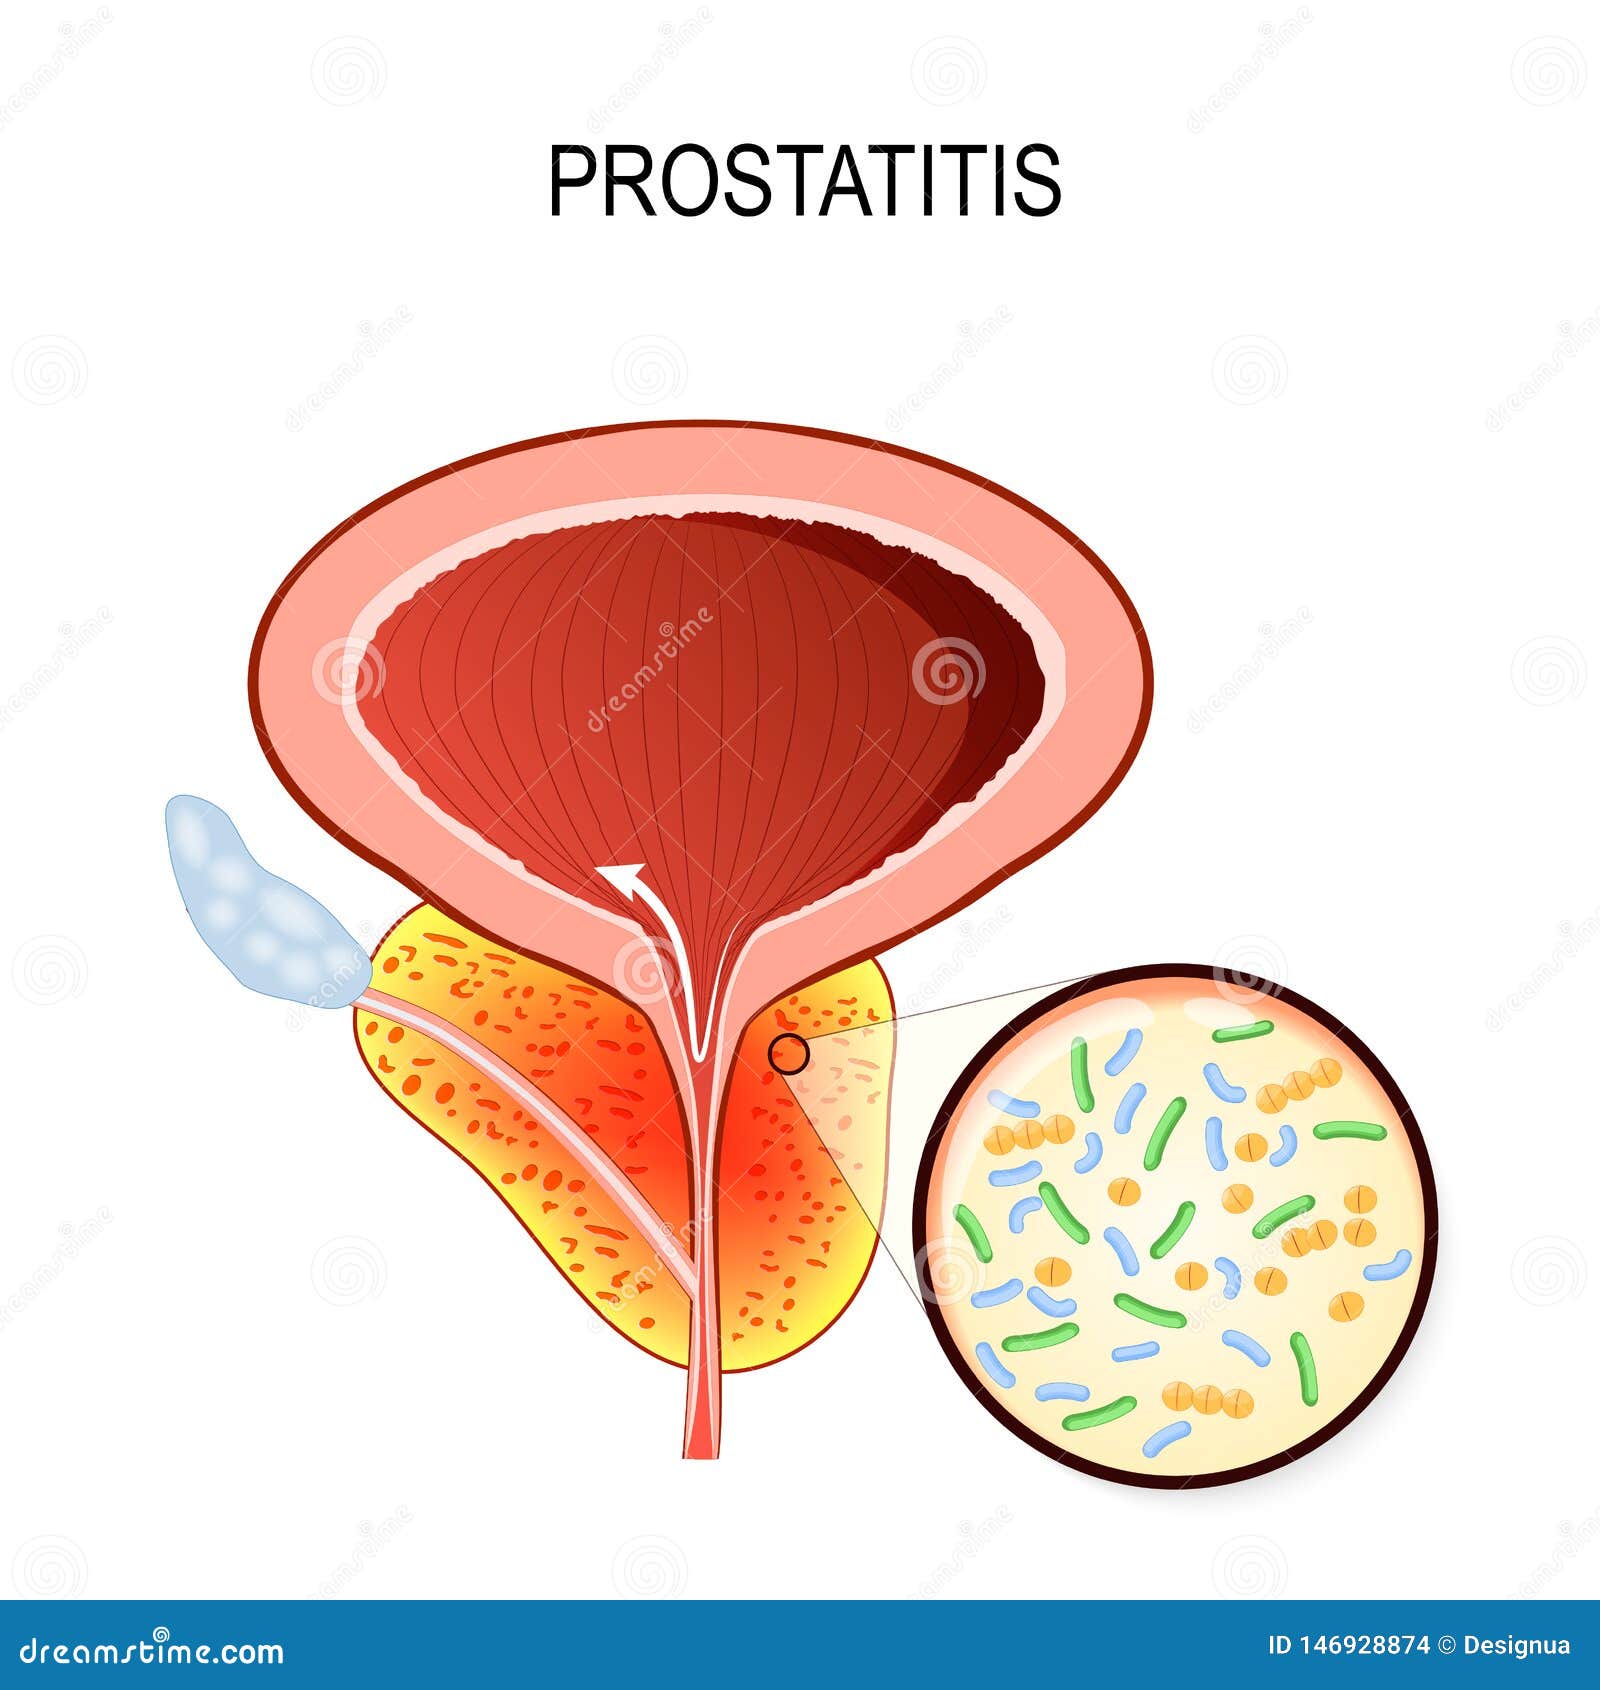 Dysbiosis prostatitist okozhat, enterococcus faecalis Prostatitis enterococcus fecalis